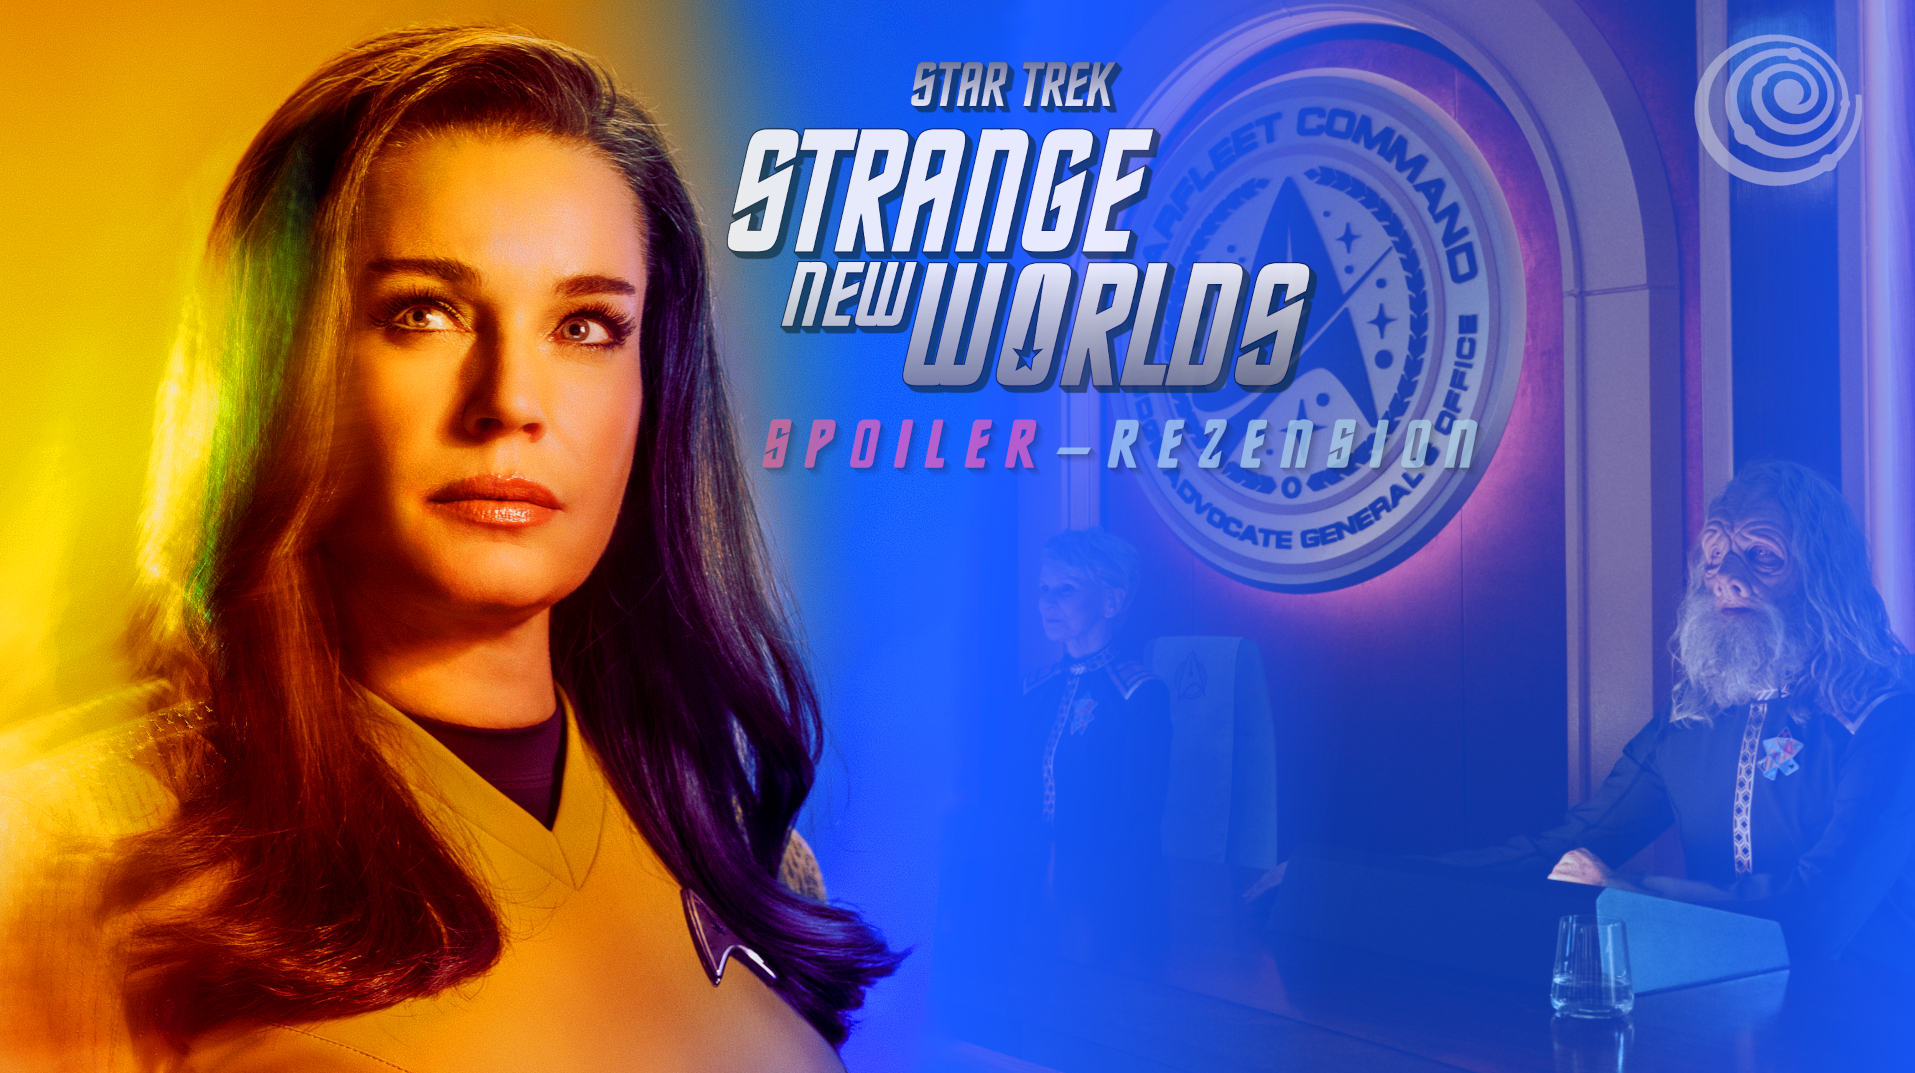 Rezension: Star Trek: Strange New Worlds 2x02 - "Ad astra per aspera" 13